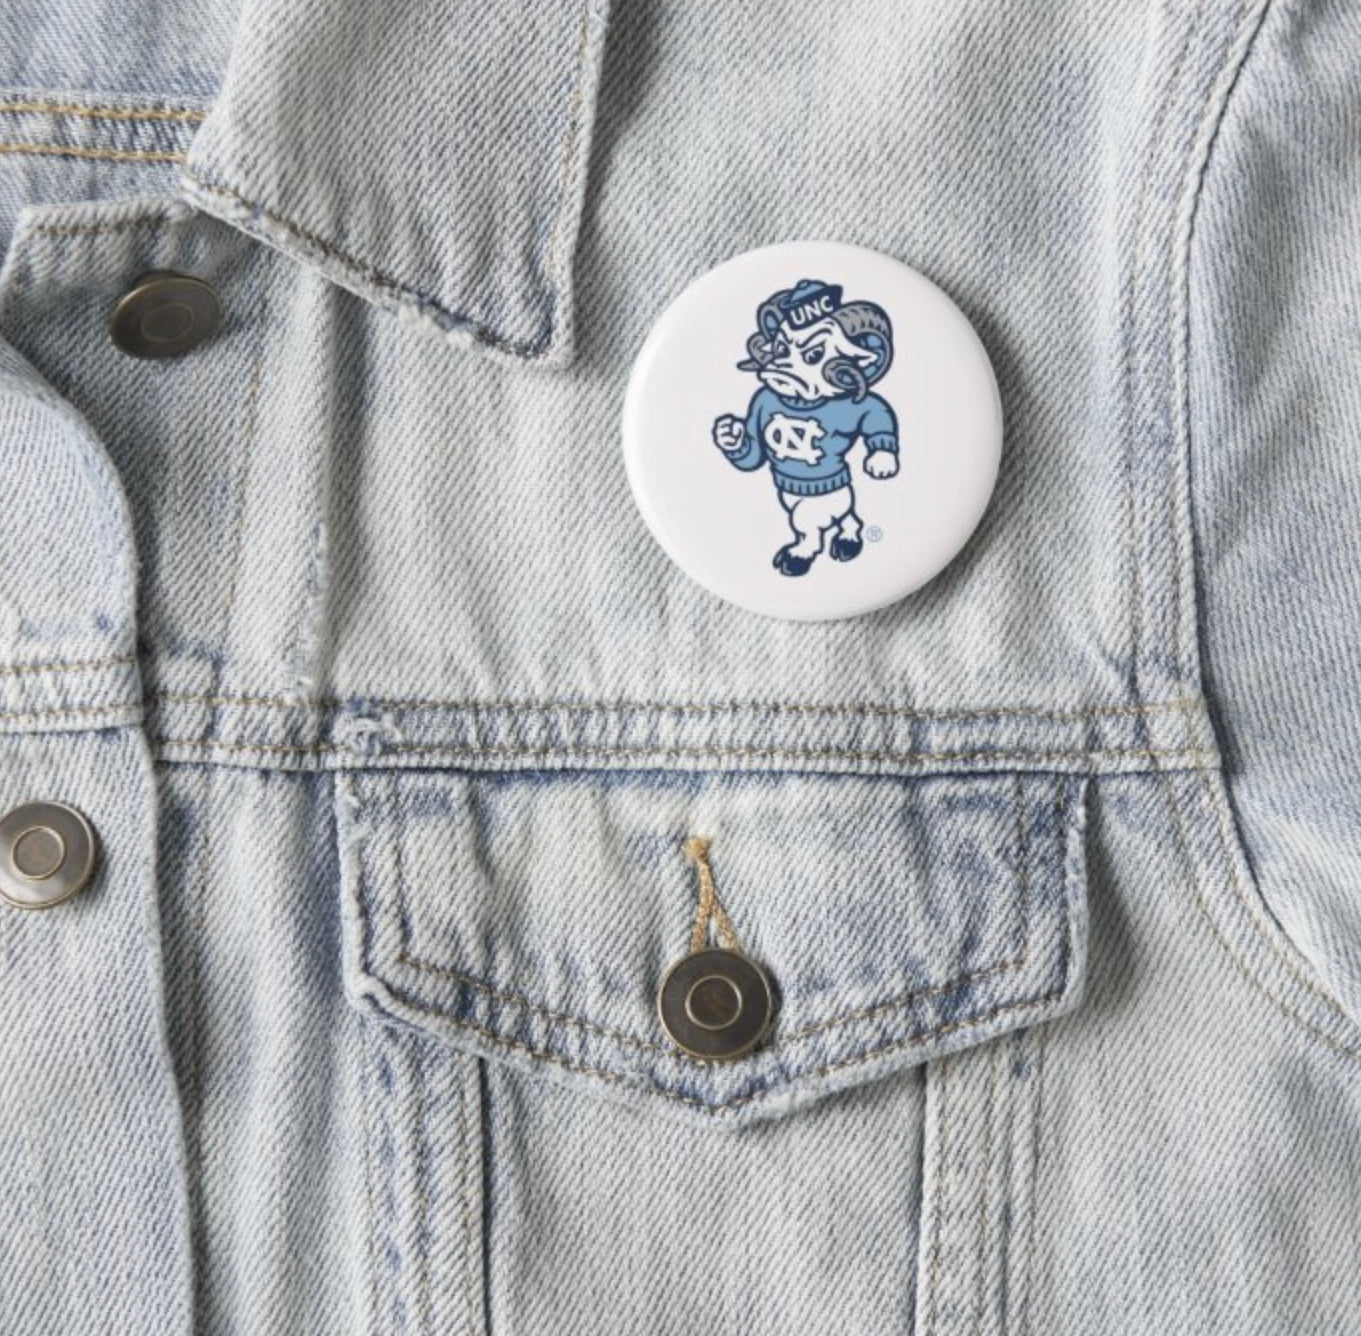 Rameses Logo Button Pin in Carolina Blue and White